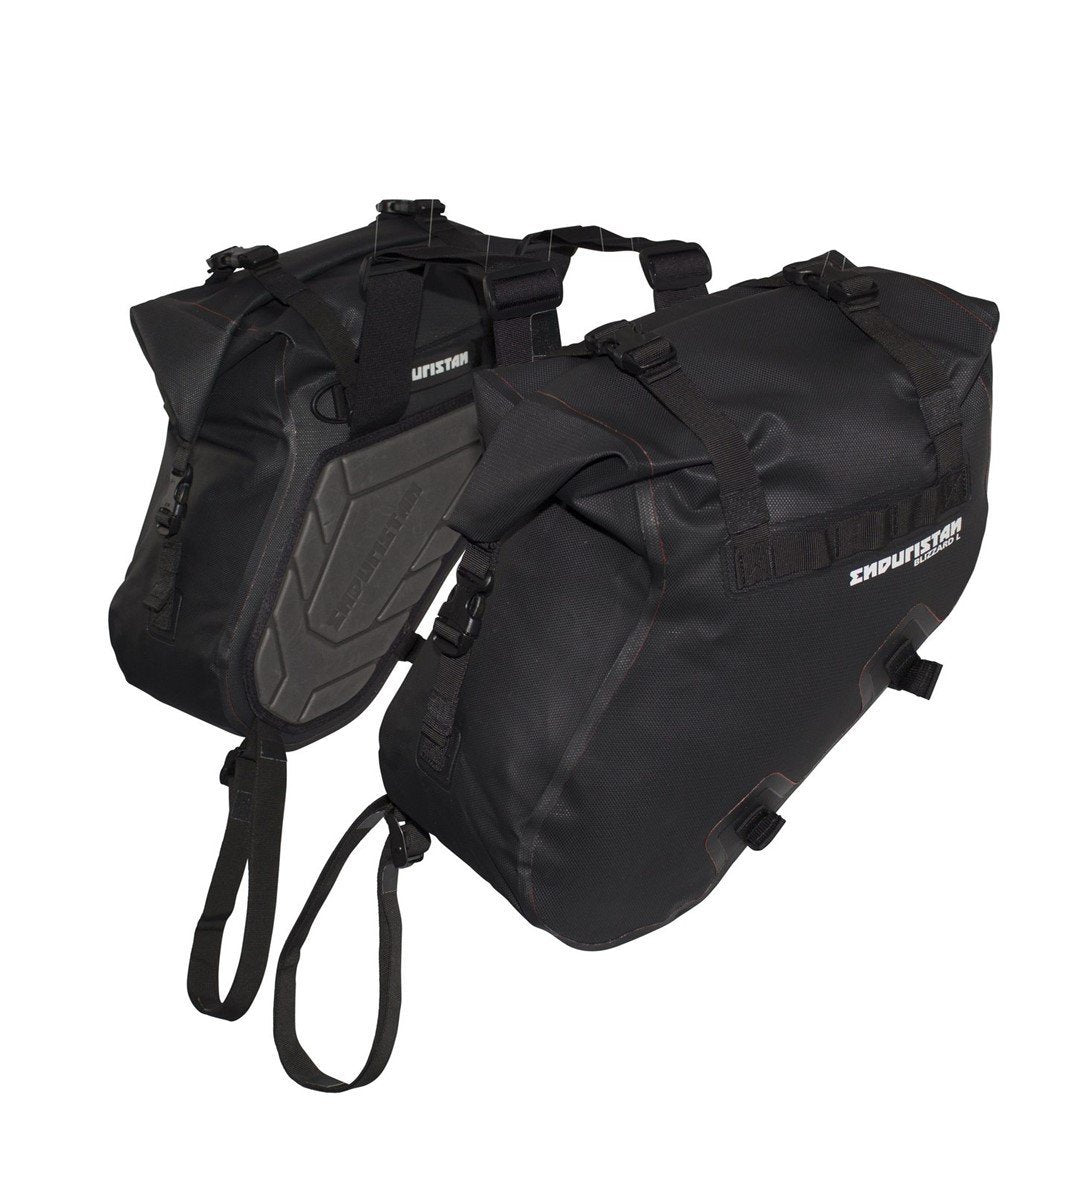 The Spots XL Sack Bag in Black/White